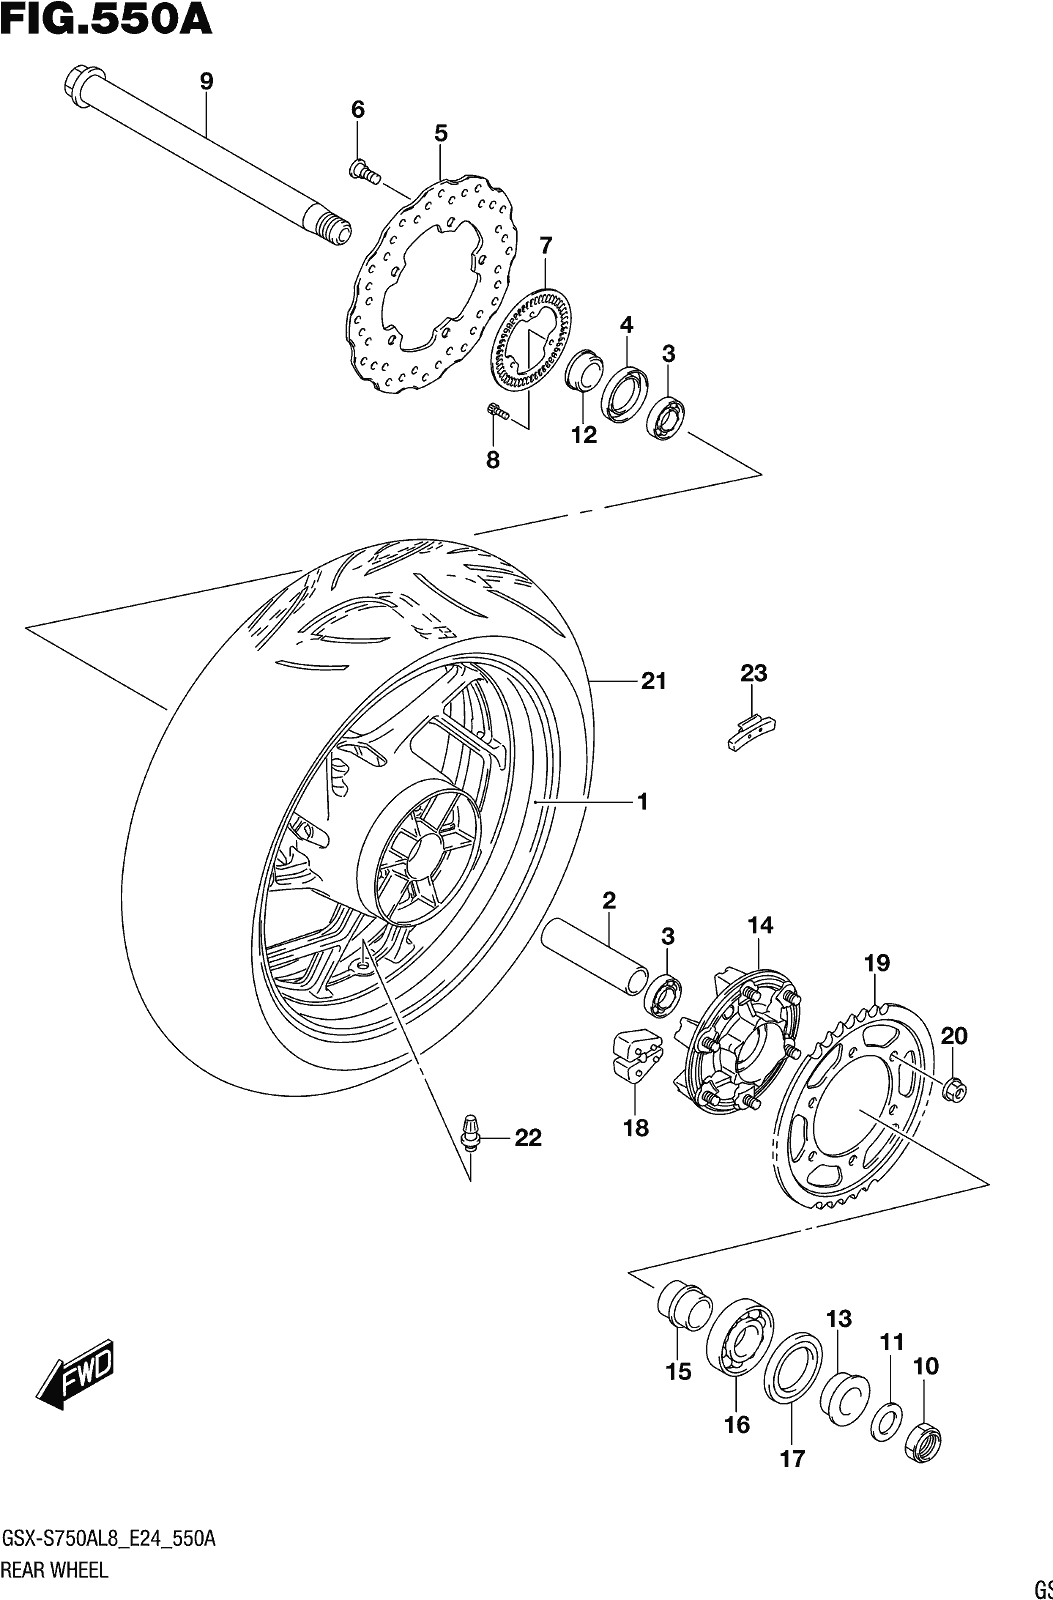 Fig.550a Rear Wheel (gsx-s750al8 E24)